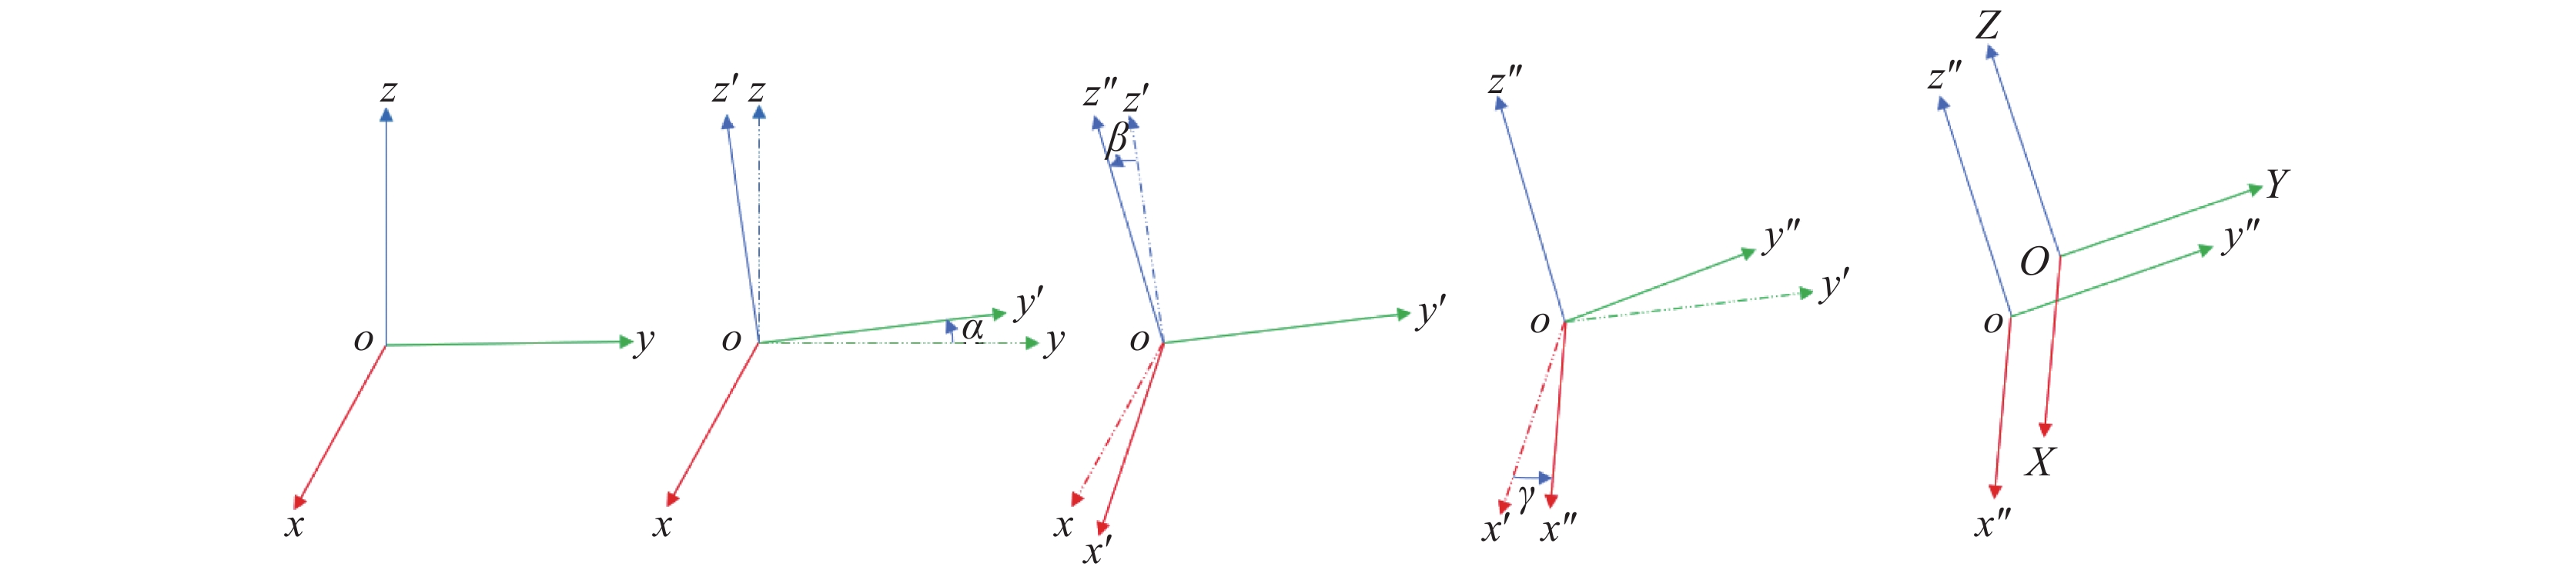 Schematic diagram of three-dimensional coordinate system transformation